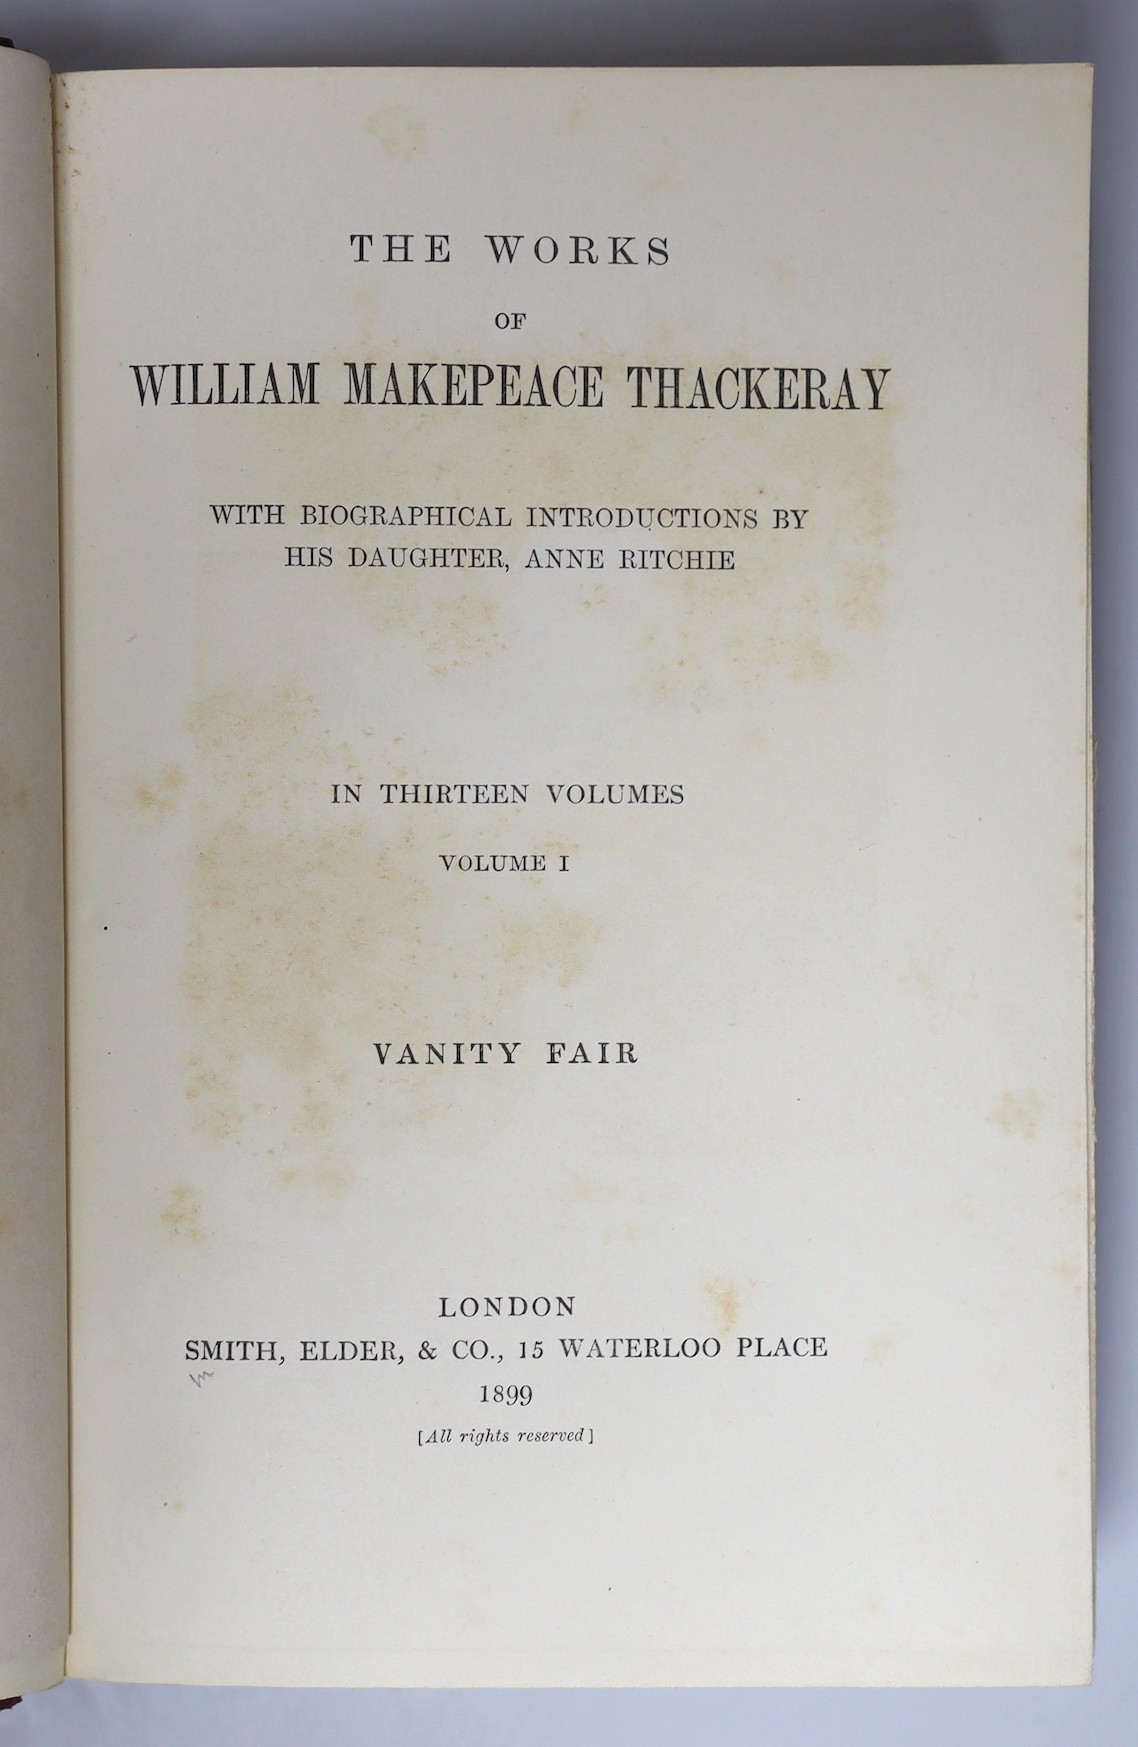 Thackeray, William Makepiece - The Works, 13 vols, 8vo, half calf, Smith, Elder, & Co., London, 1898-99